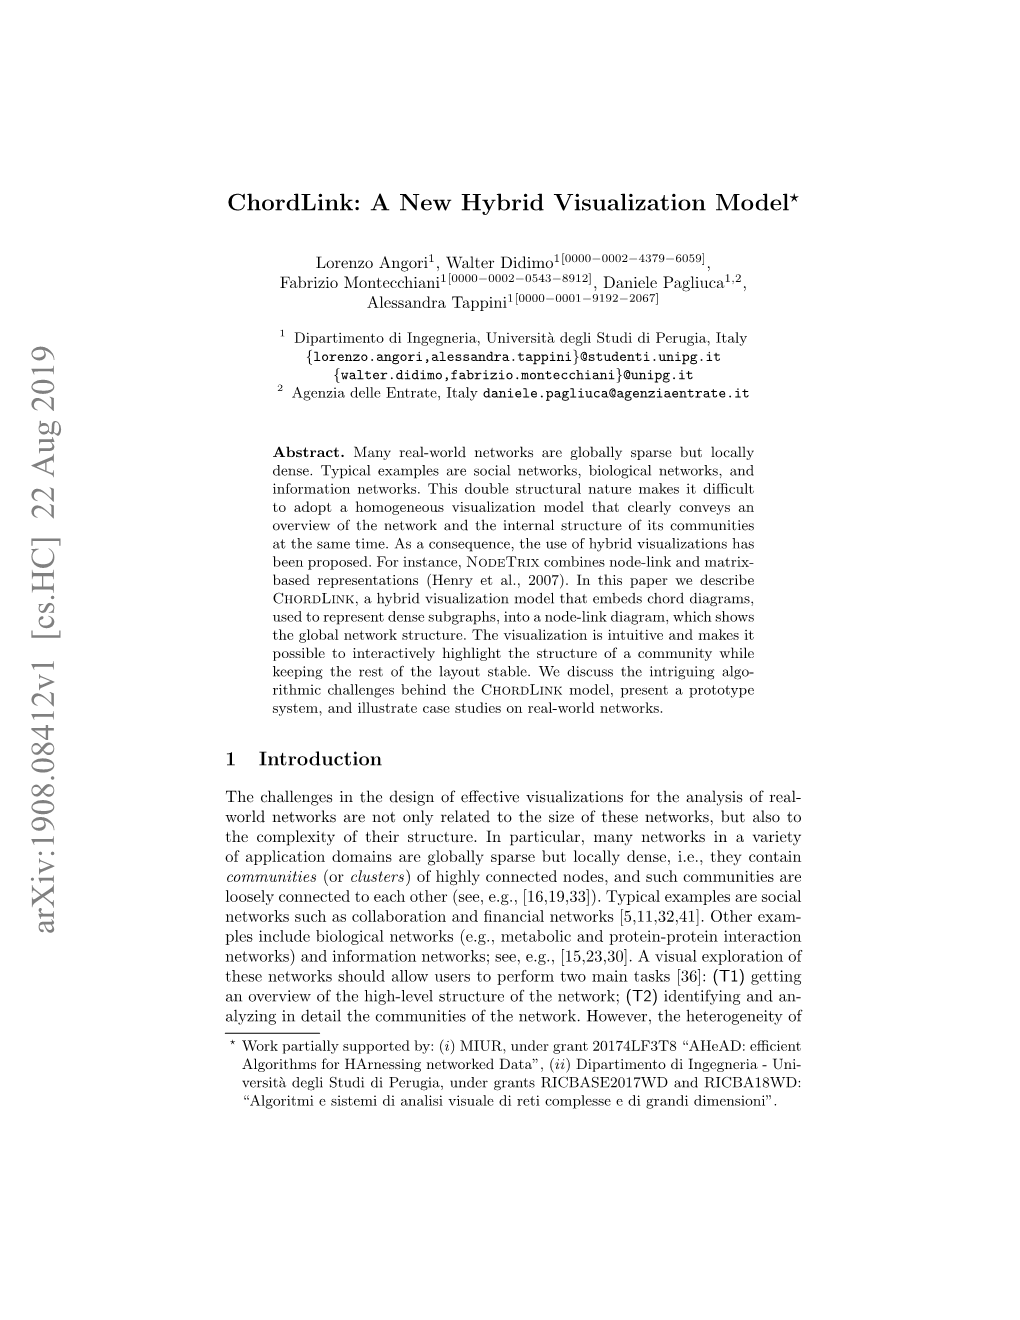 Chordlink: a New Hybrid Visualization Model?